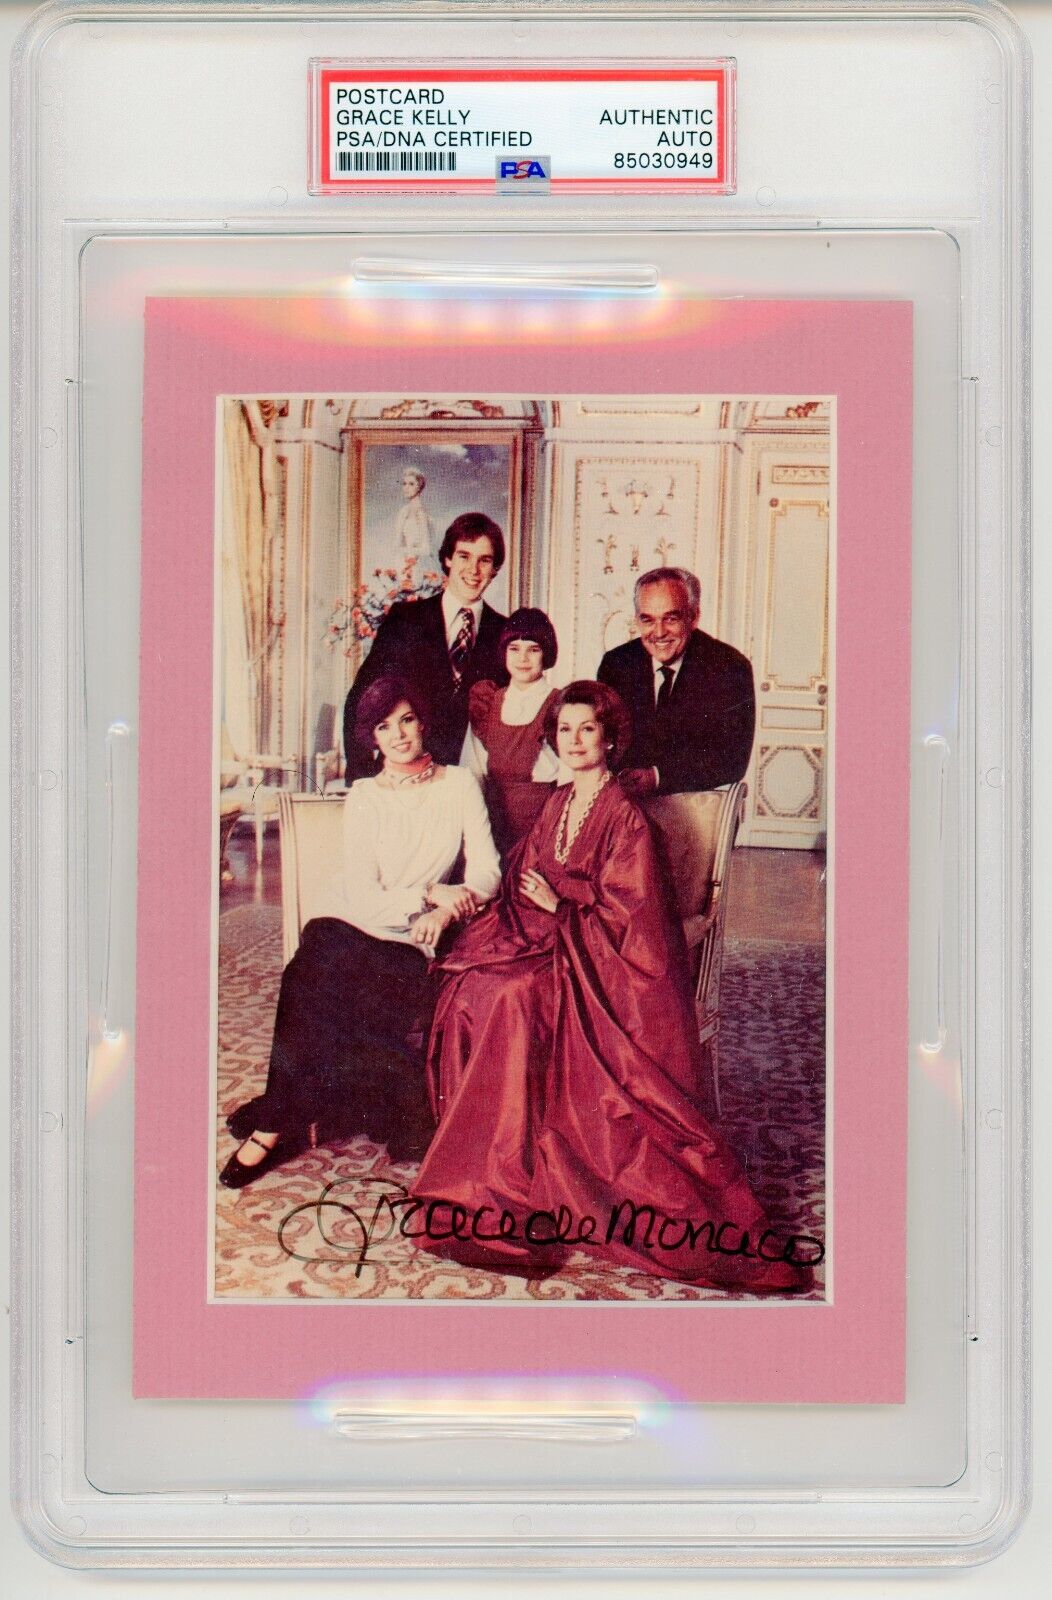 Grace Kelly (Princess of Monaco) ~ Signed Autographed Postcard Photo ~ PSA DNA